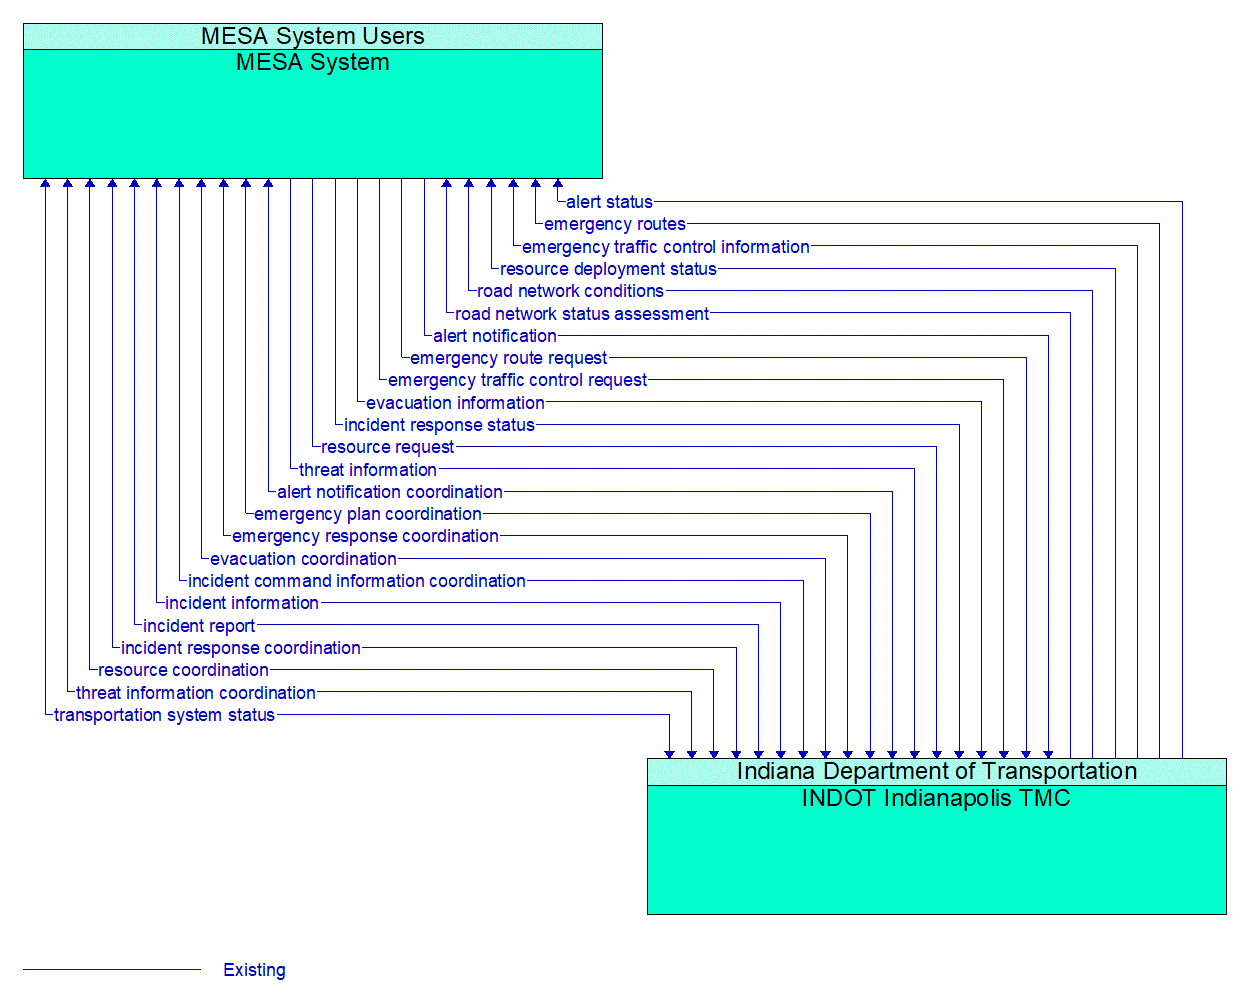 Architecture Flow Diagram: INDOT Indianapolis TMC <--> MESA System